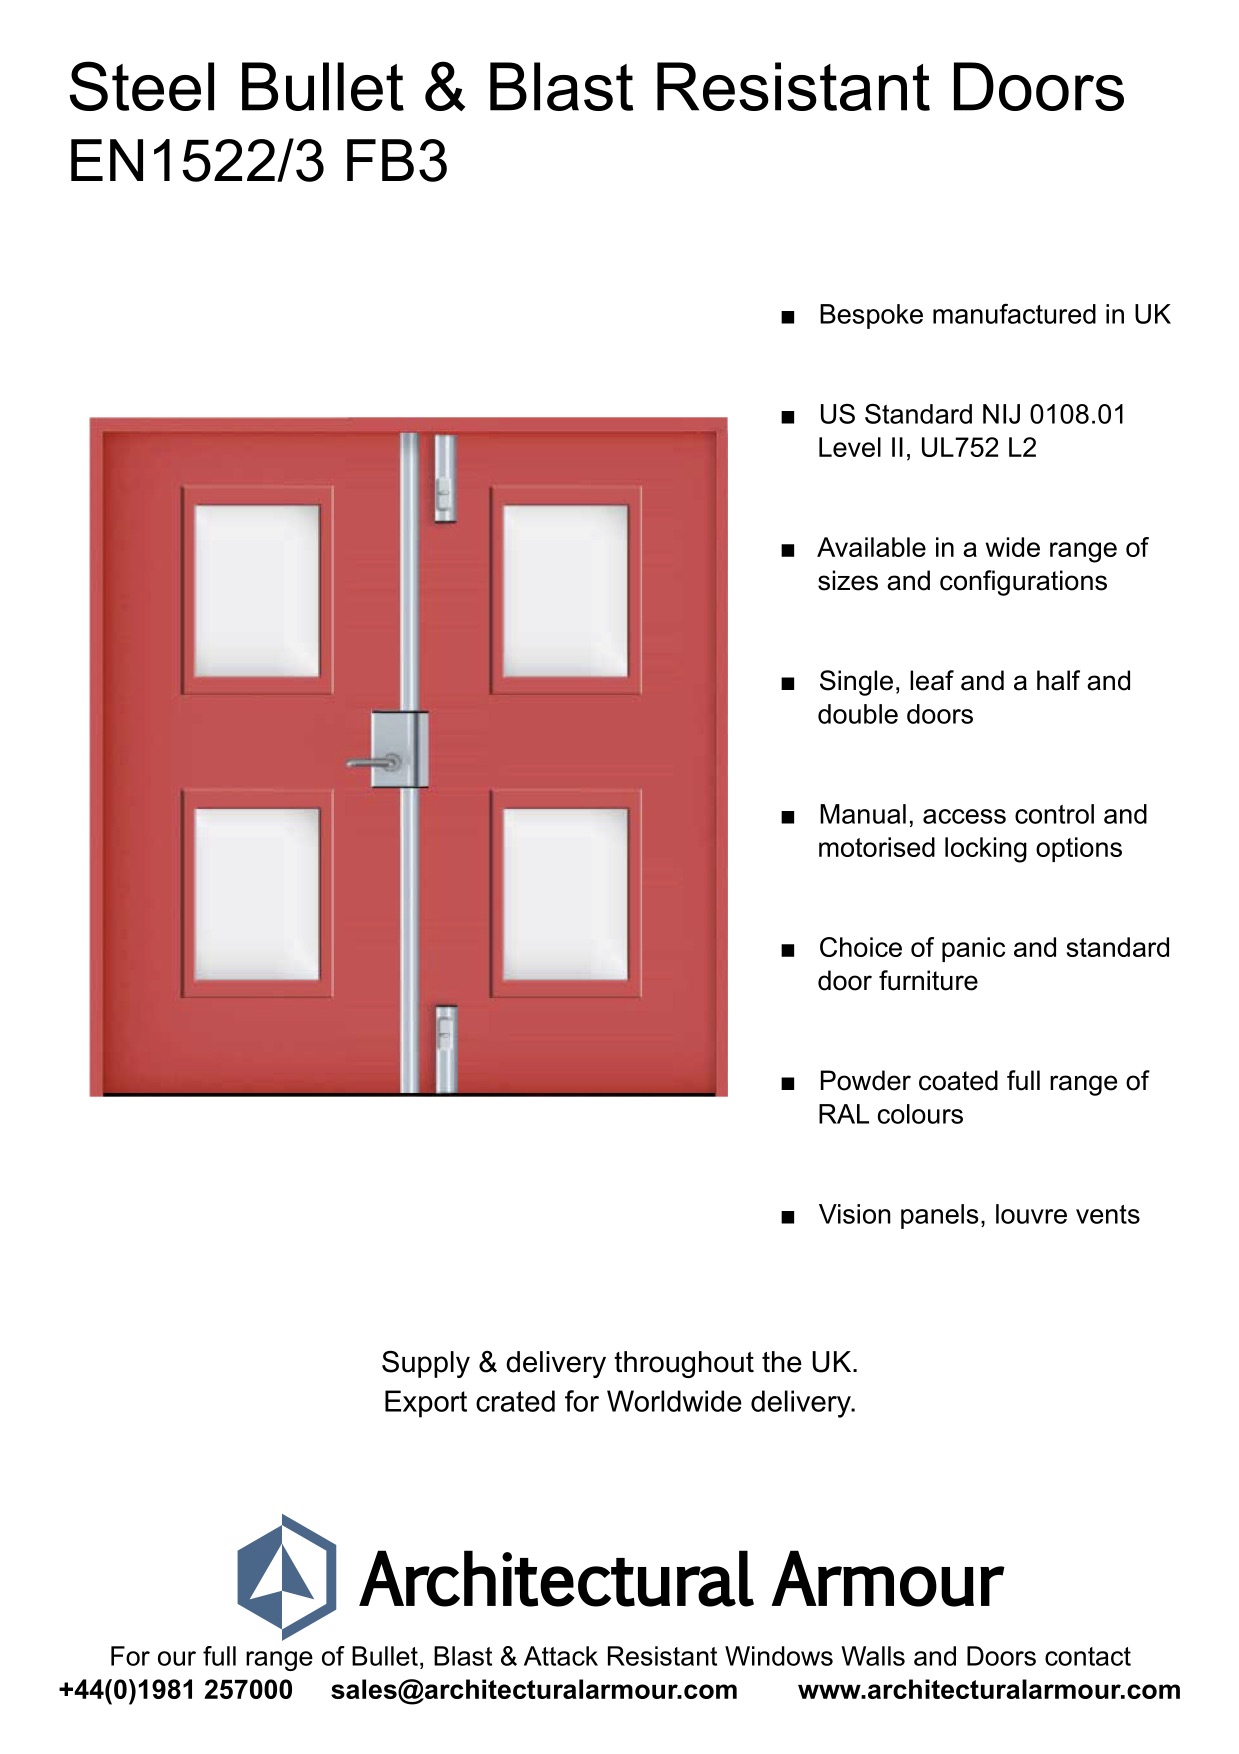 Blast-and-Ballistic-Resistant-Steel-Doors-Vision-Panels-EN1522-3-FB3-BR3